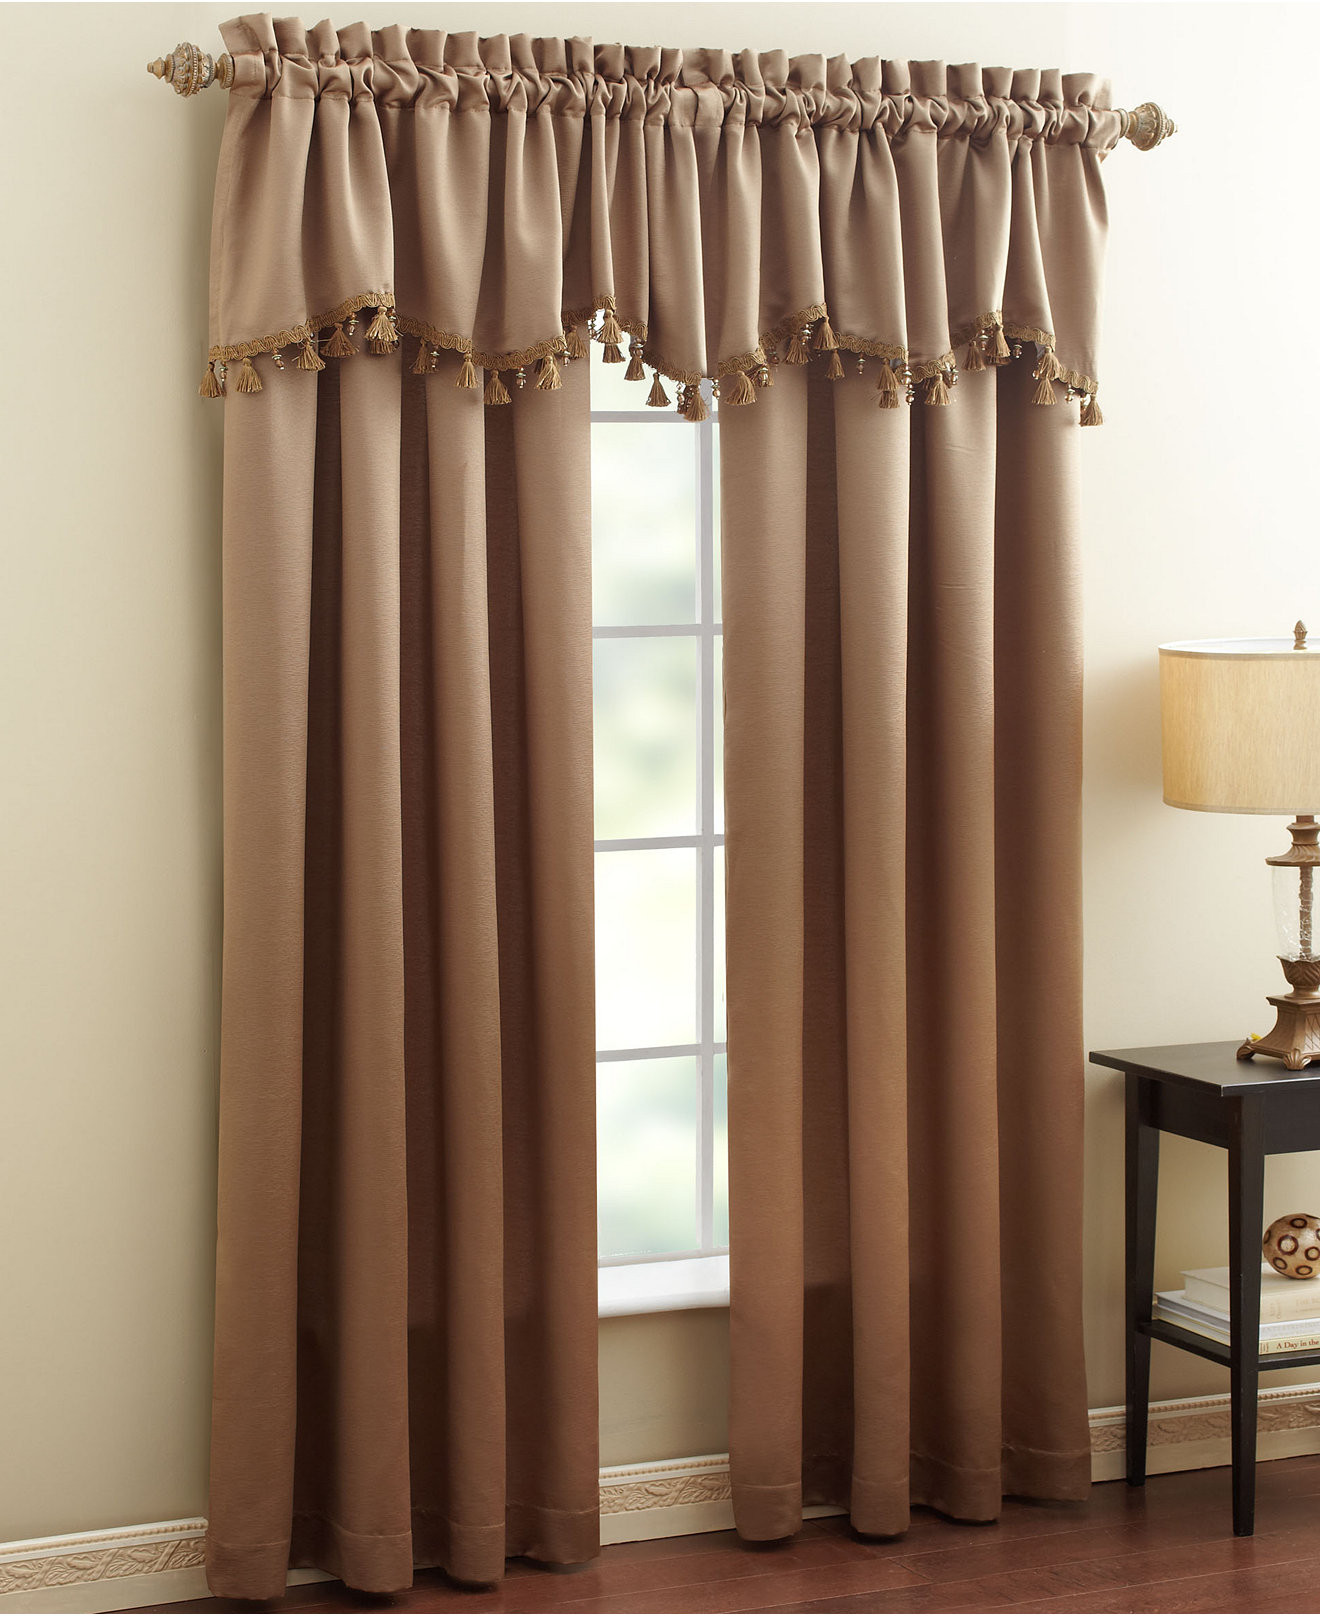 Macys Kitchen Curtains
 Blinds & Curtains Beautiful Macys Curtains For Enchanting